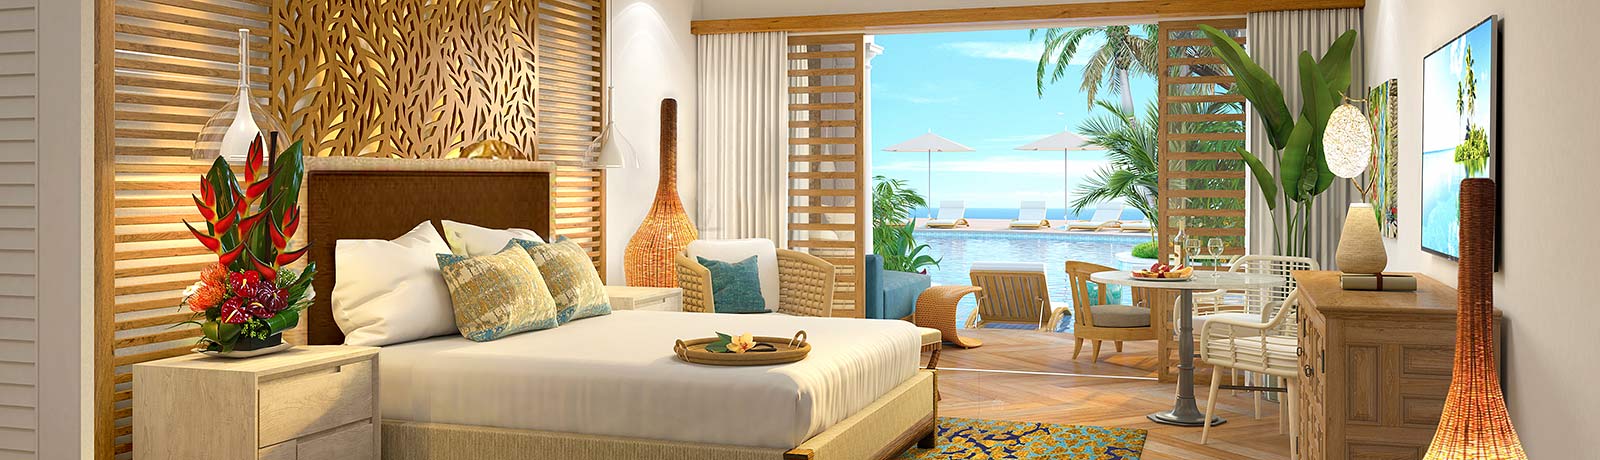 Anichi Resort & Spa: Guestroom